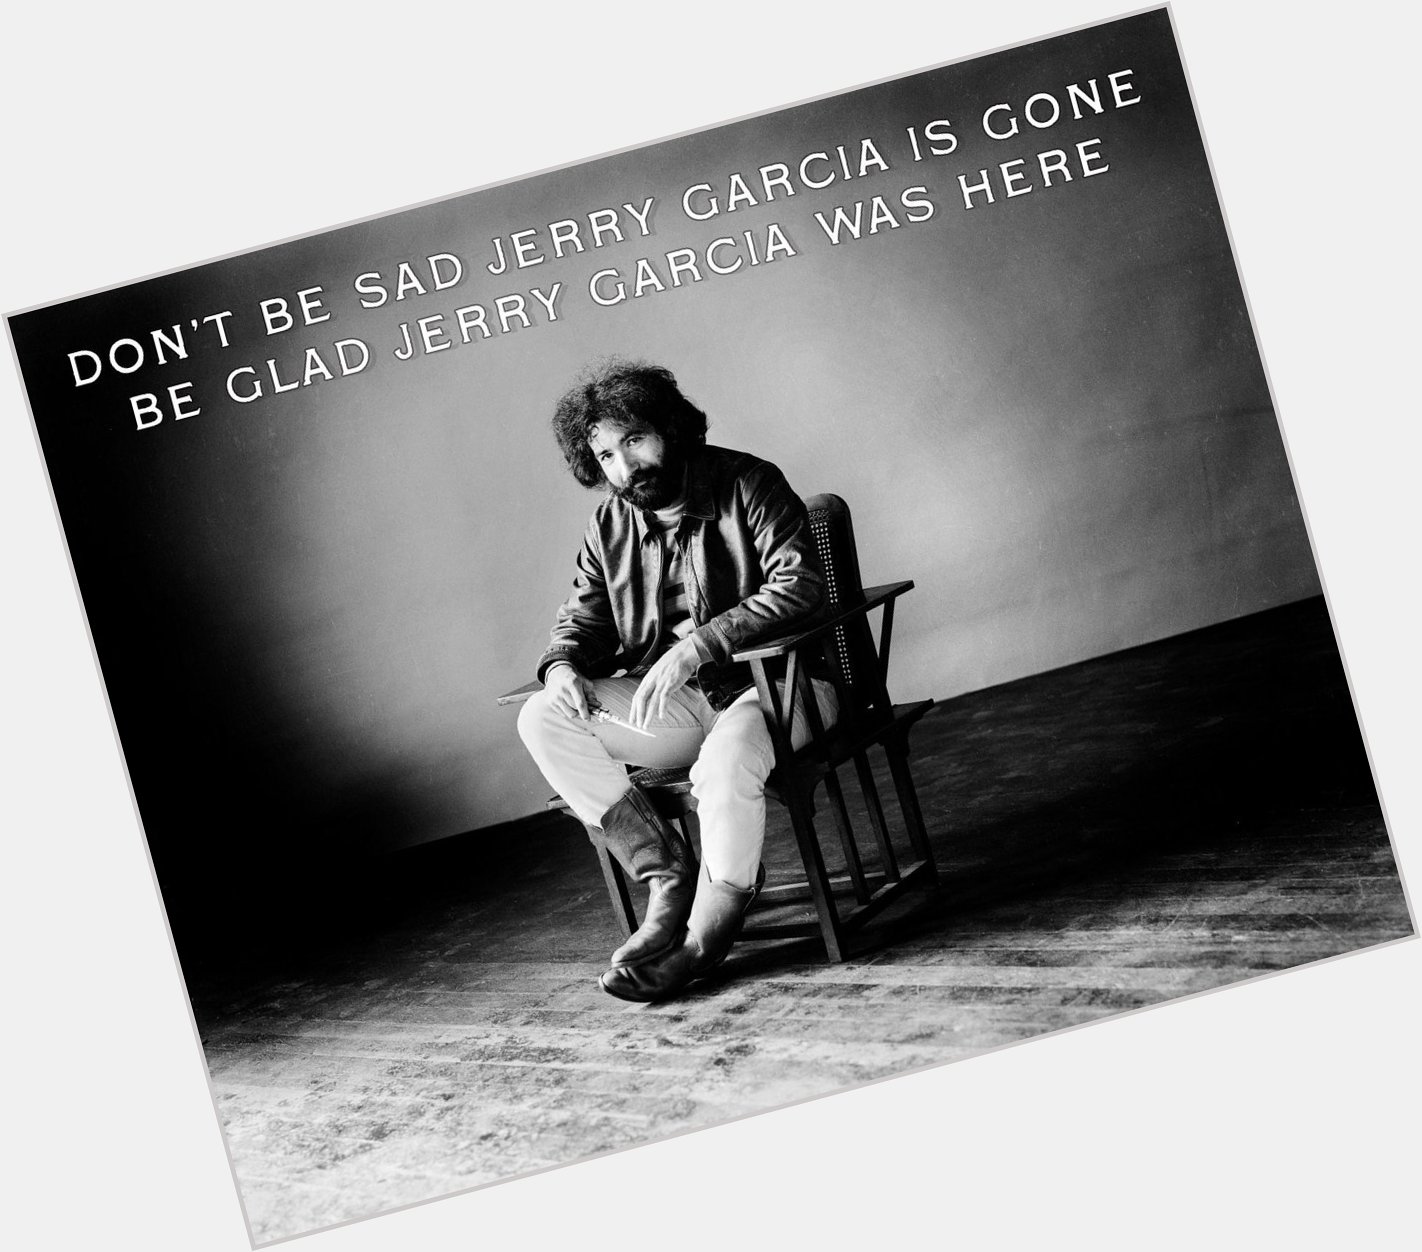 HAPPY BIRTHDAY JERRY GARCIA: Don t be sad Jerry Garcia is gone, be glad Jerry Garcia was here. 